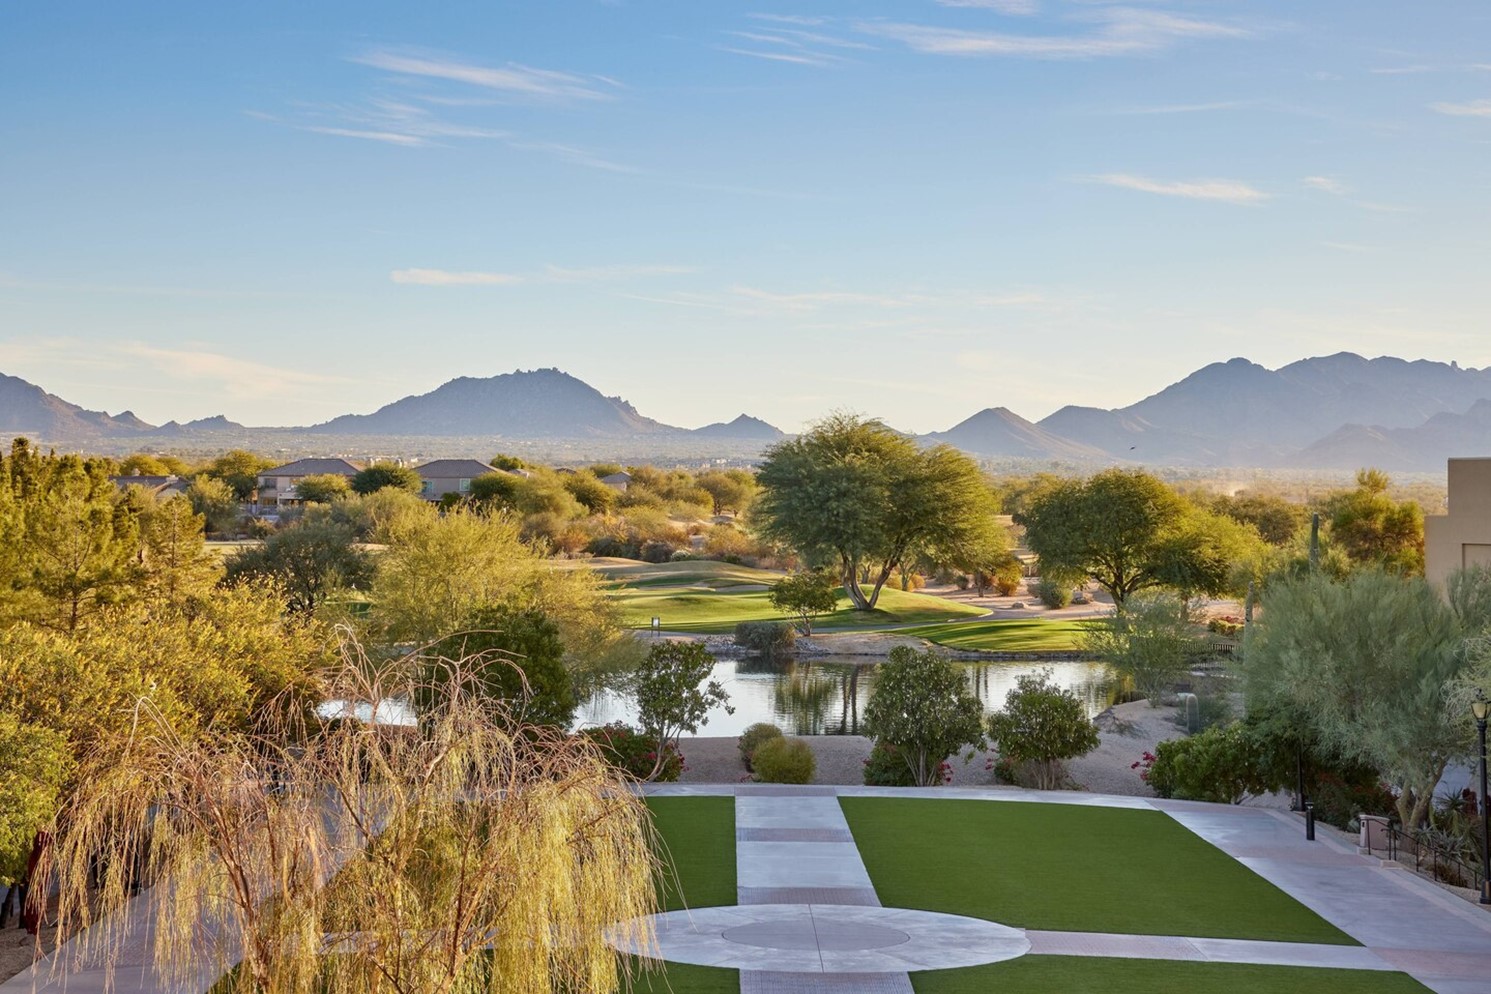 The JW Marriott Phoenix Desert Ridge Resort & Spa showcases the breathtaking natural beauty of the Arizona desert.